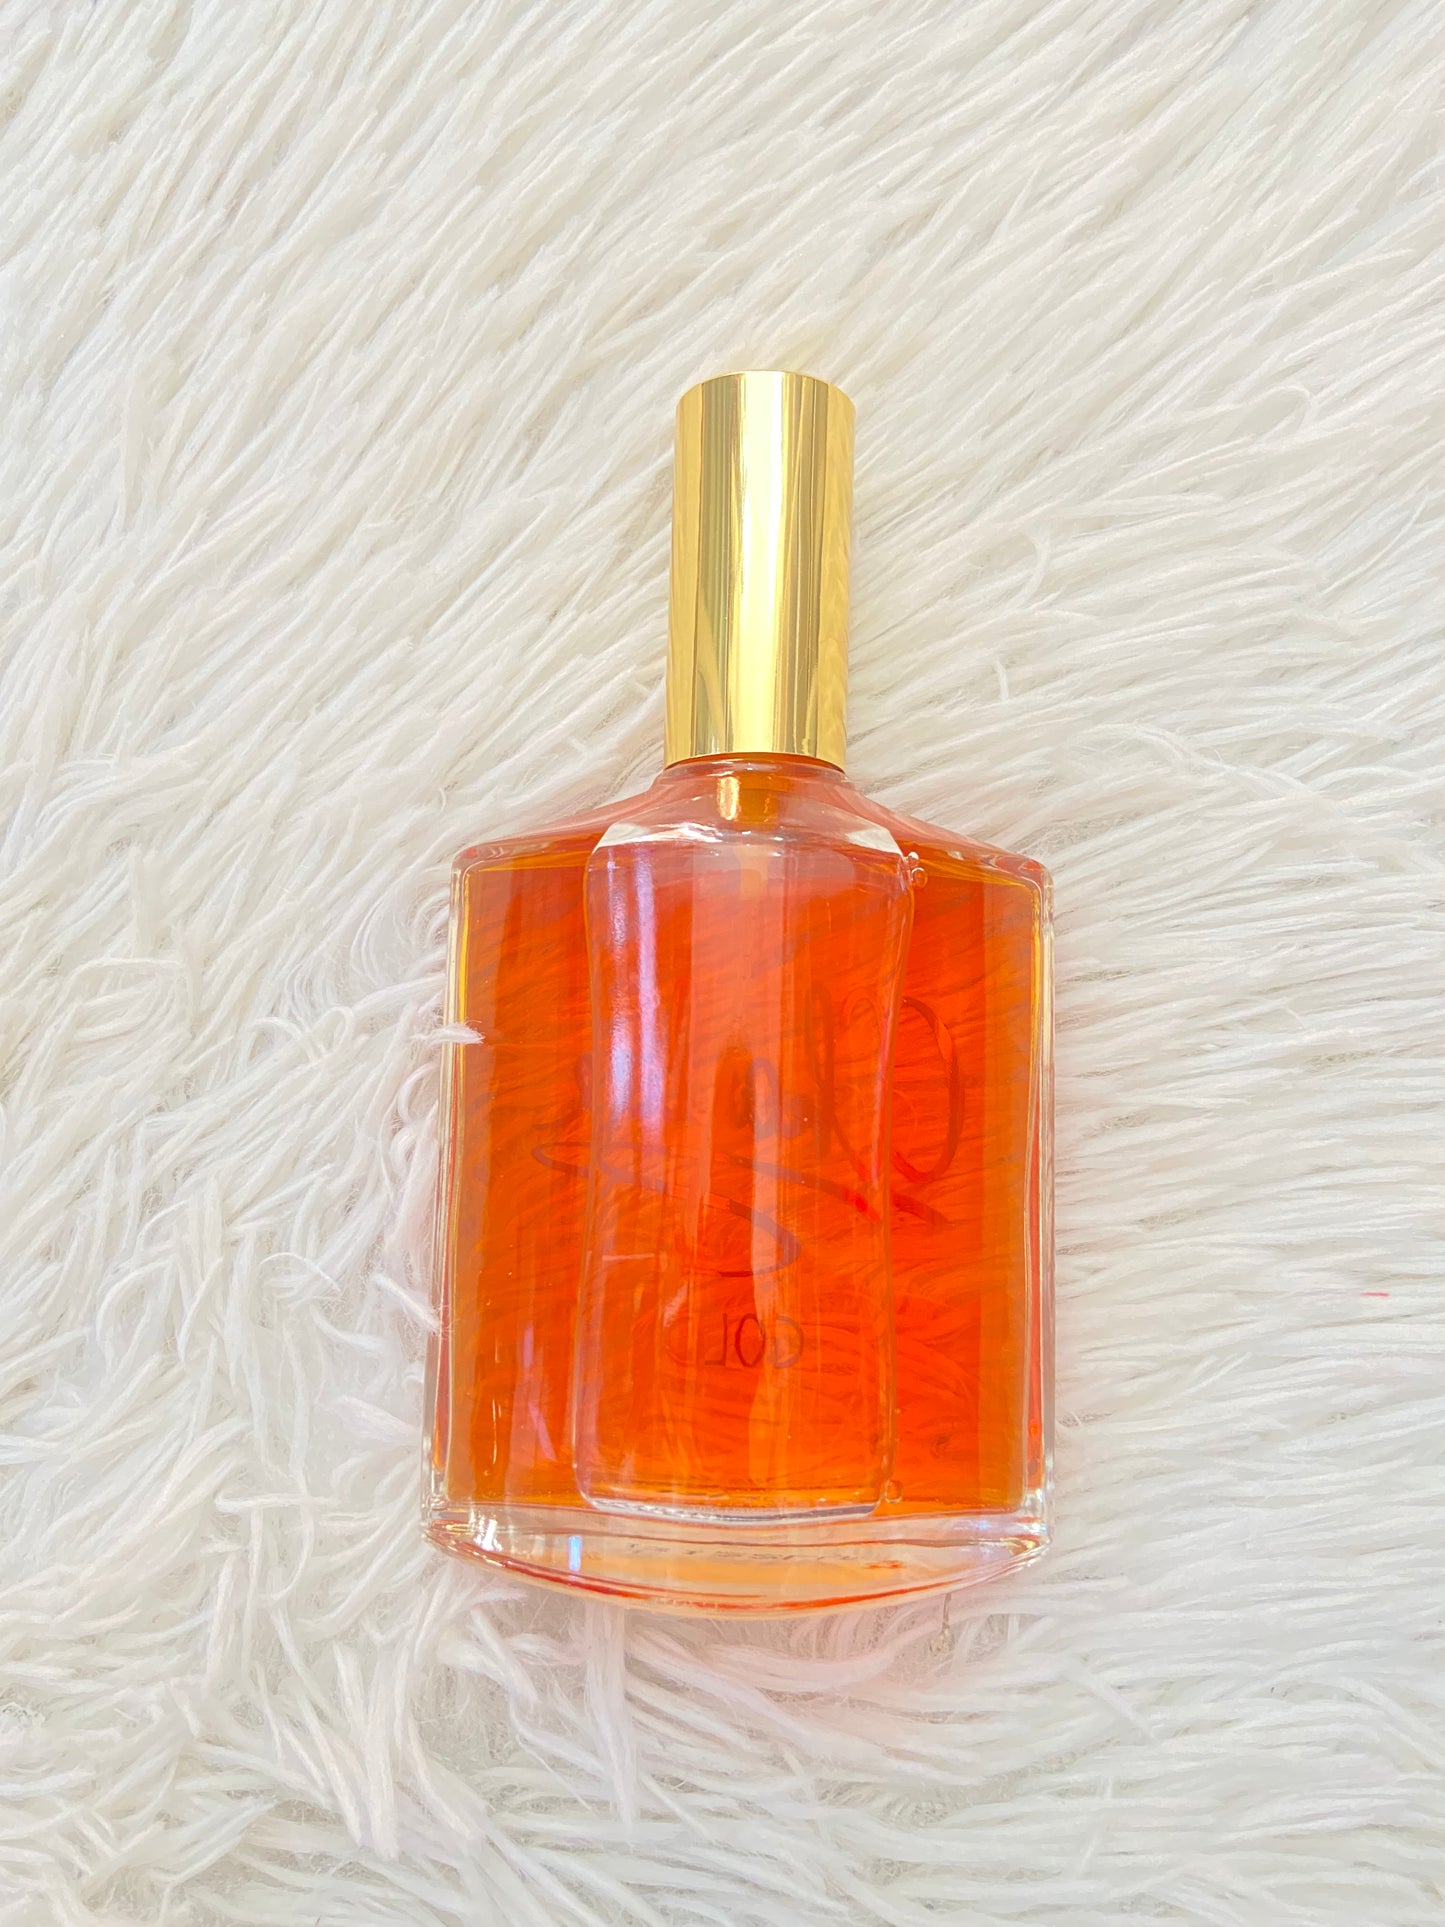 Perfume REVLON CHARLIE GOLD original naranja con detalles dorados.